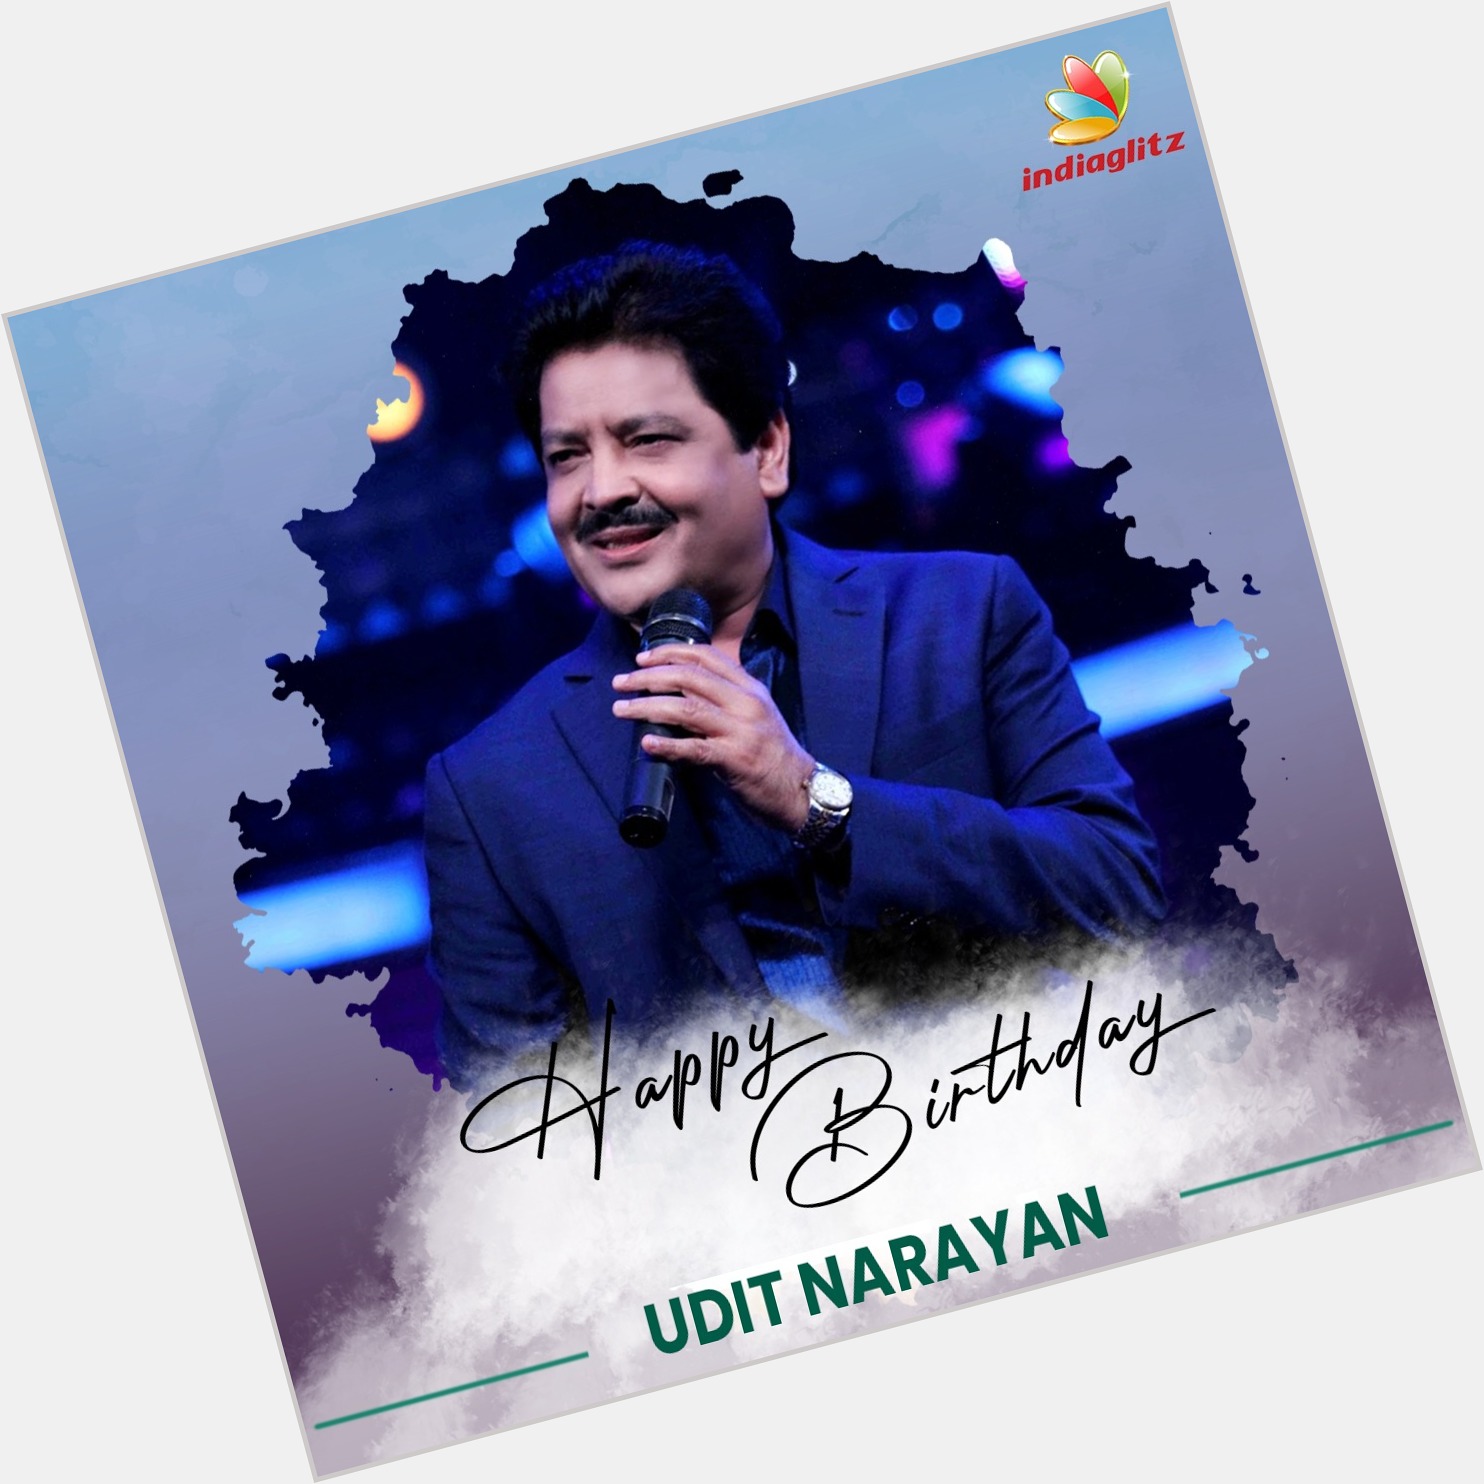 Wishing Singer Udit Narayan a Very Happy Birthday   